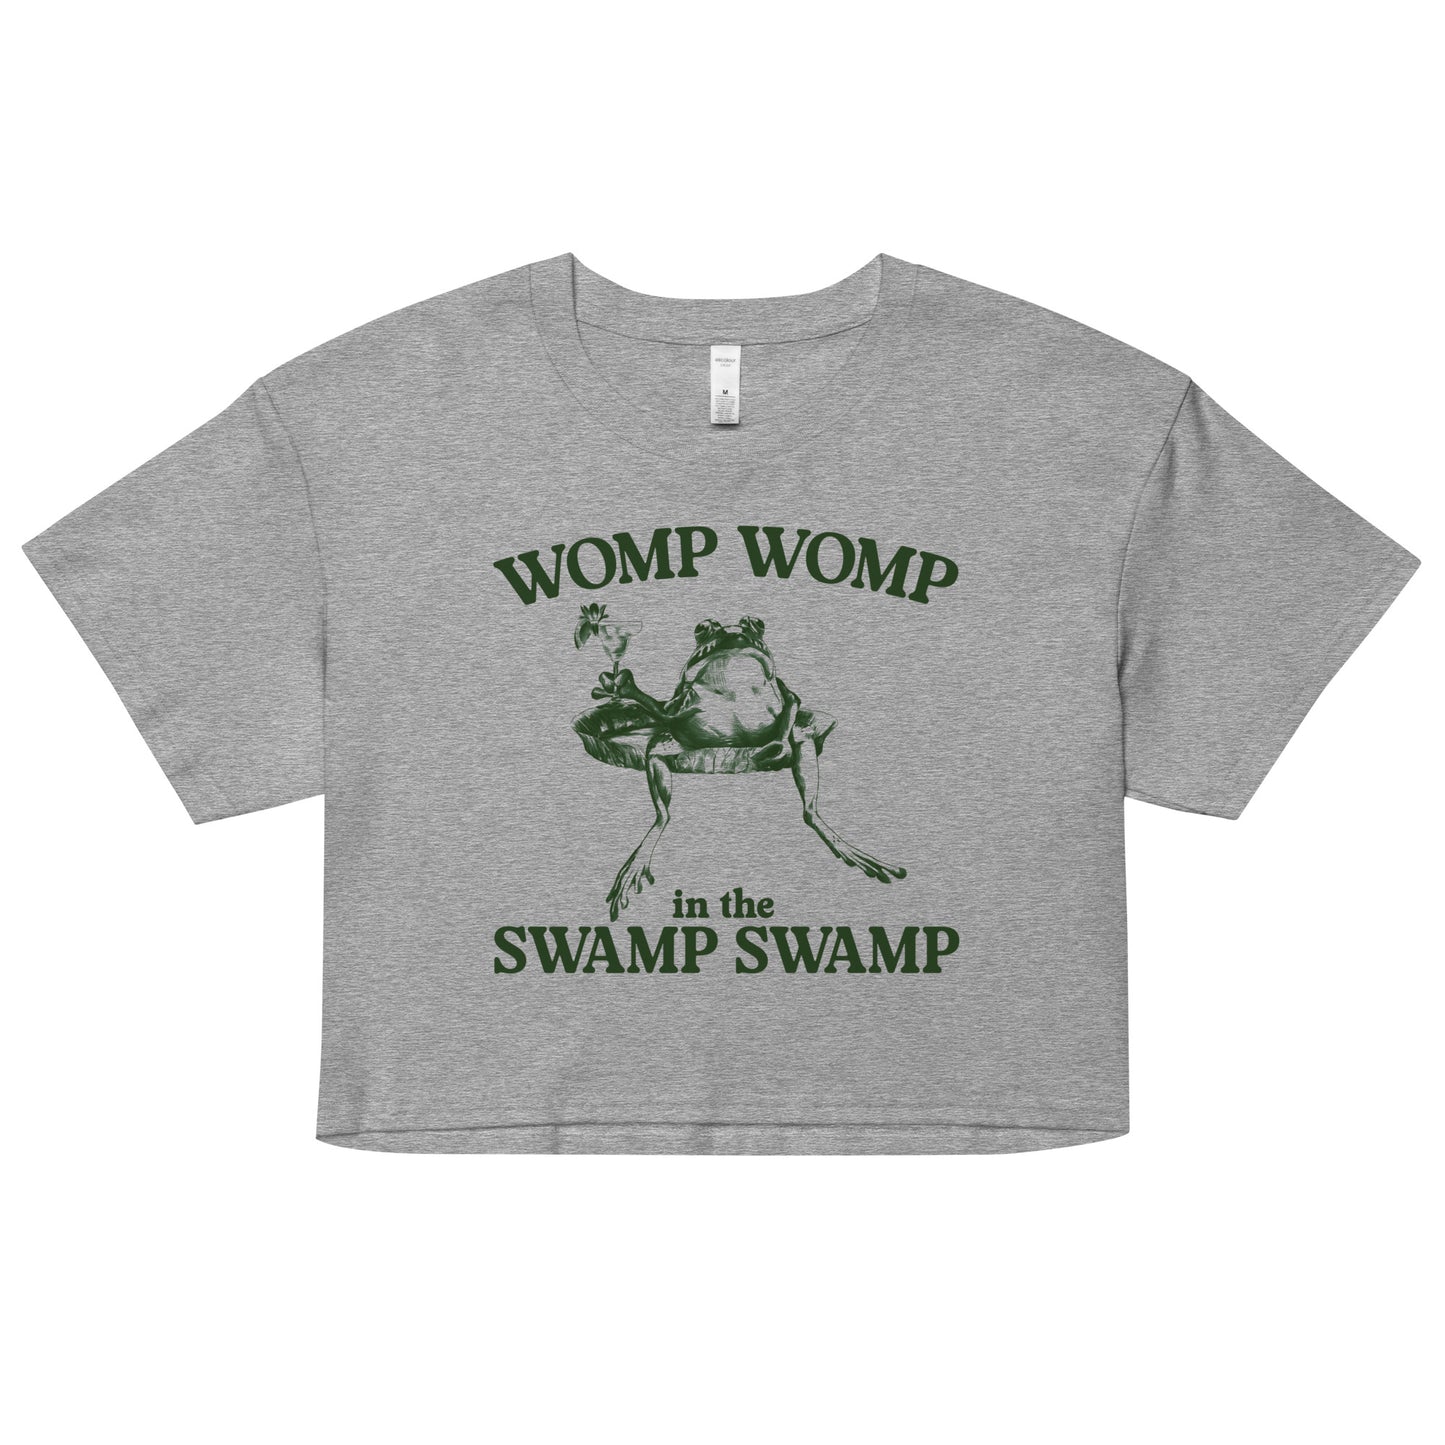 Womp Womp in the Swamp Swamp crop top